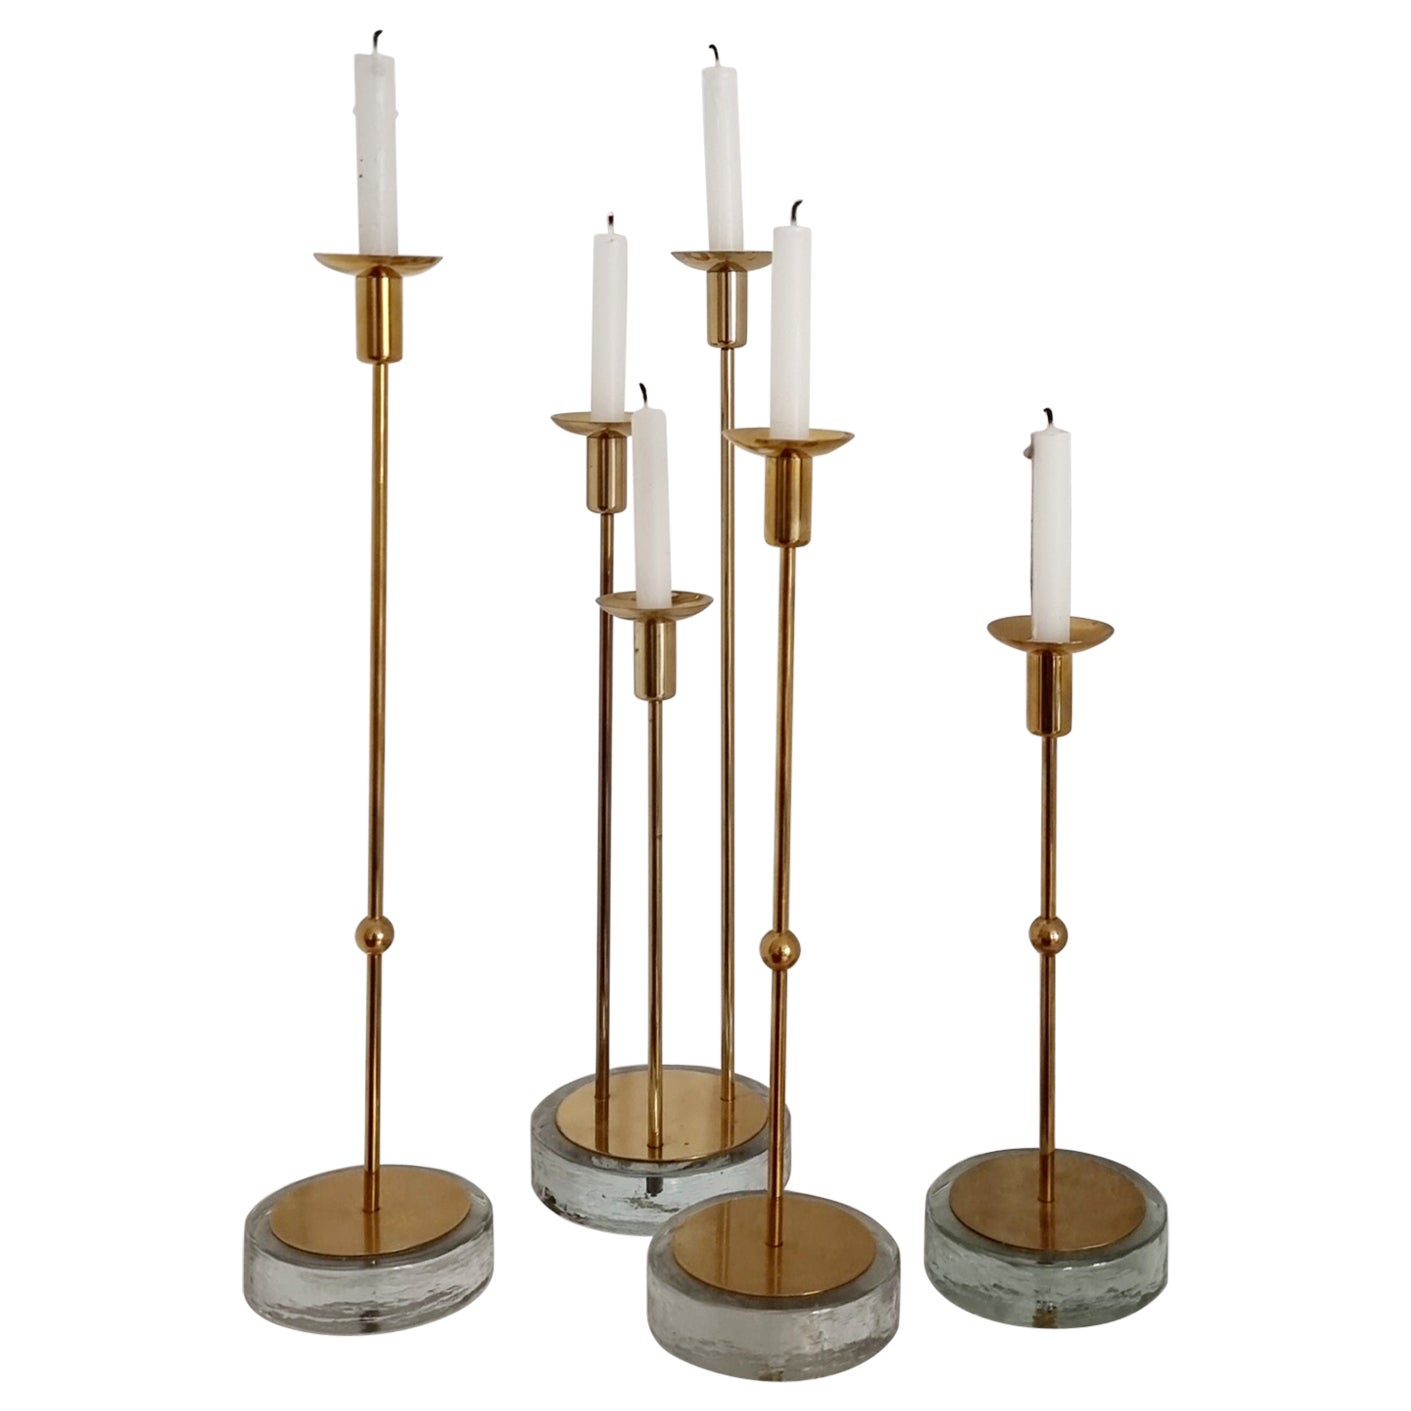 Gunnar Ander, Four Candle Holders, Brass & Glass, Ystad Metall, Swedish Modern